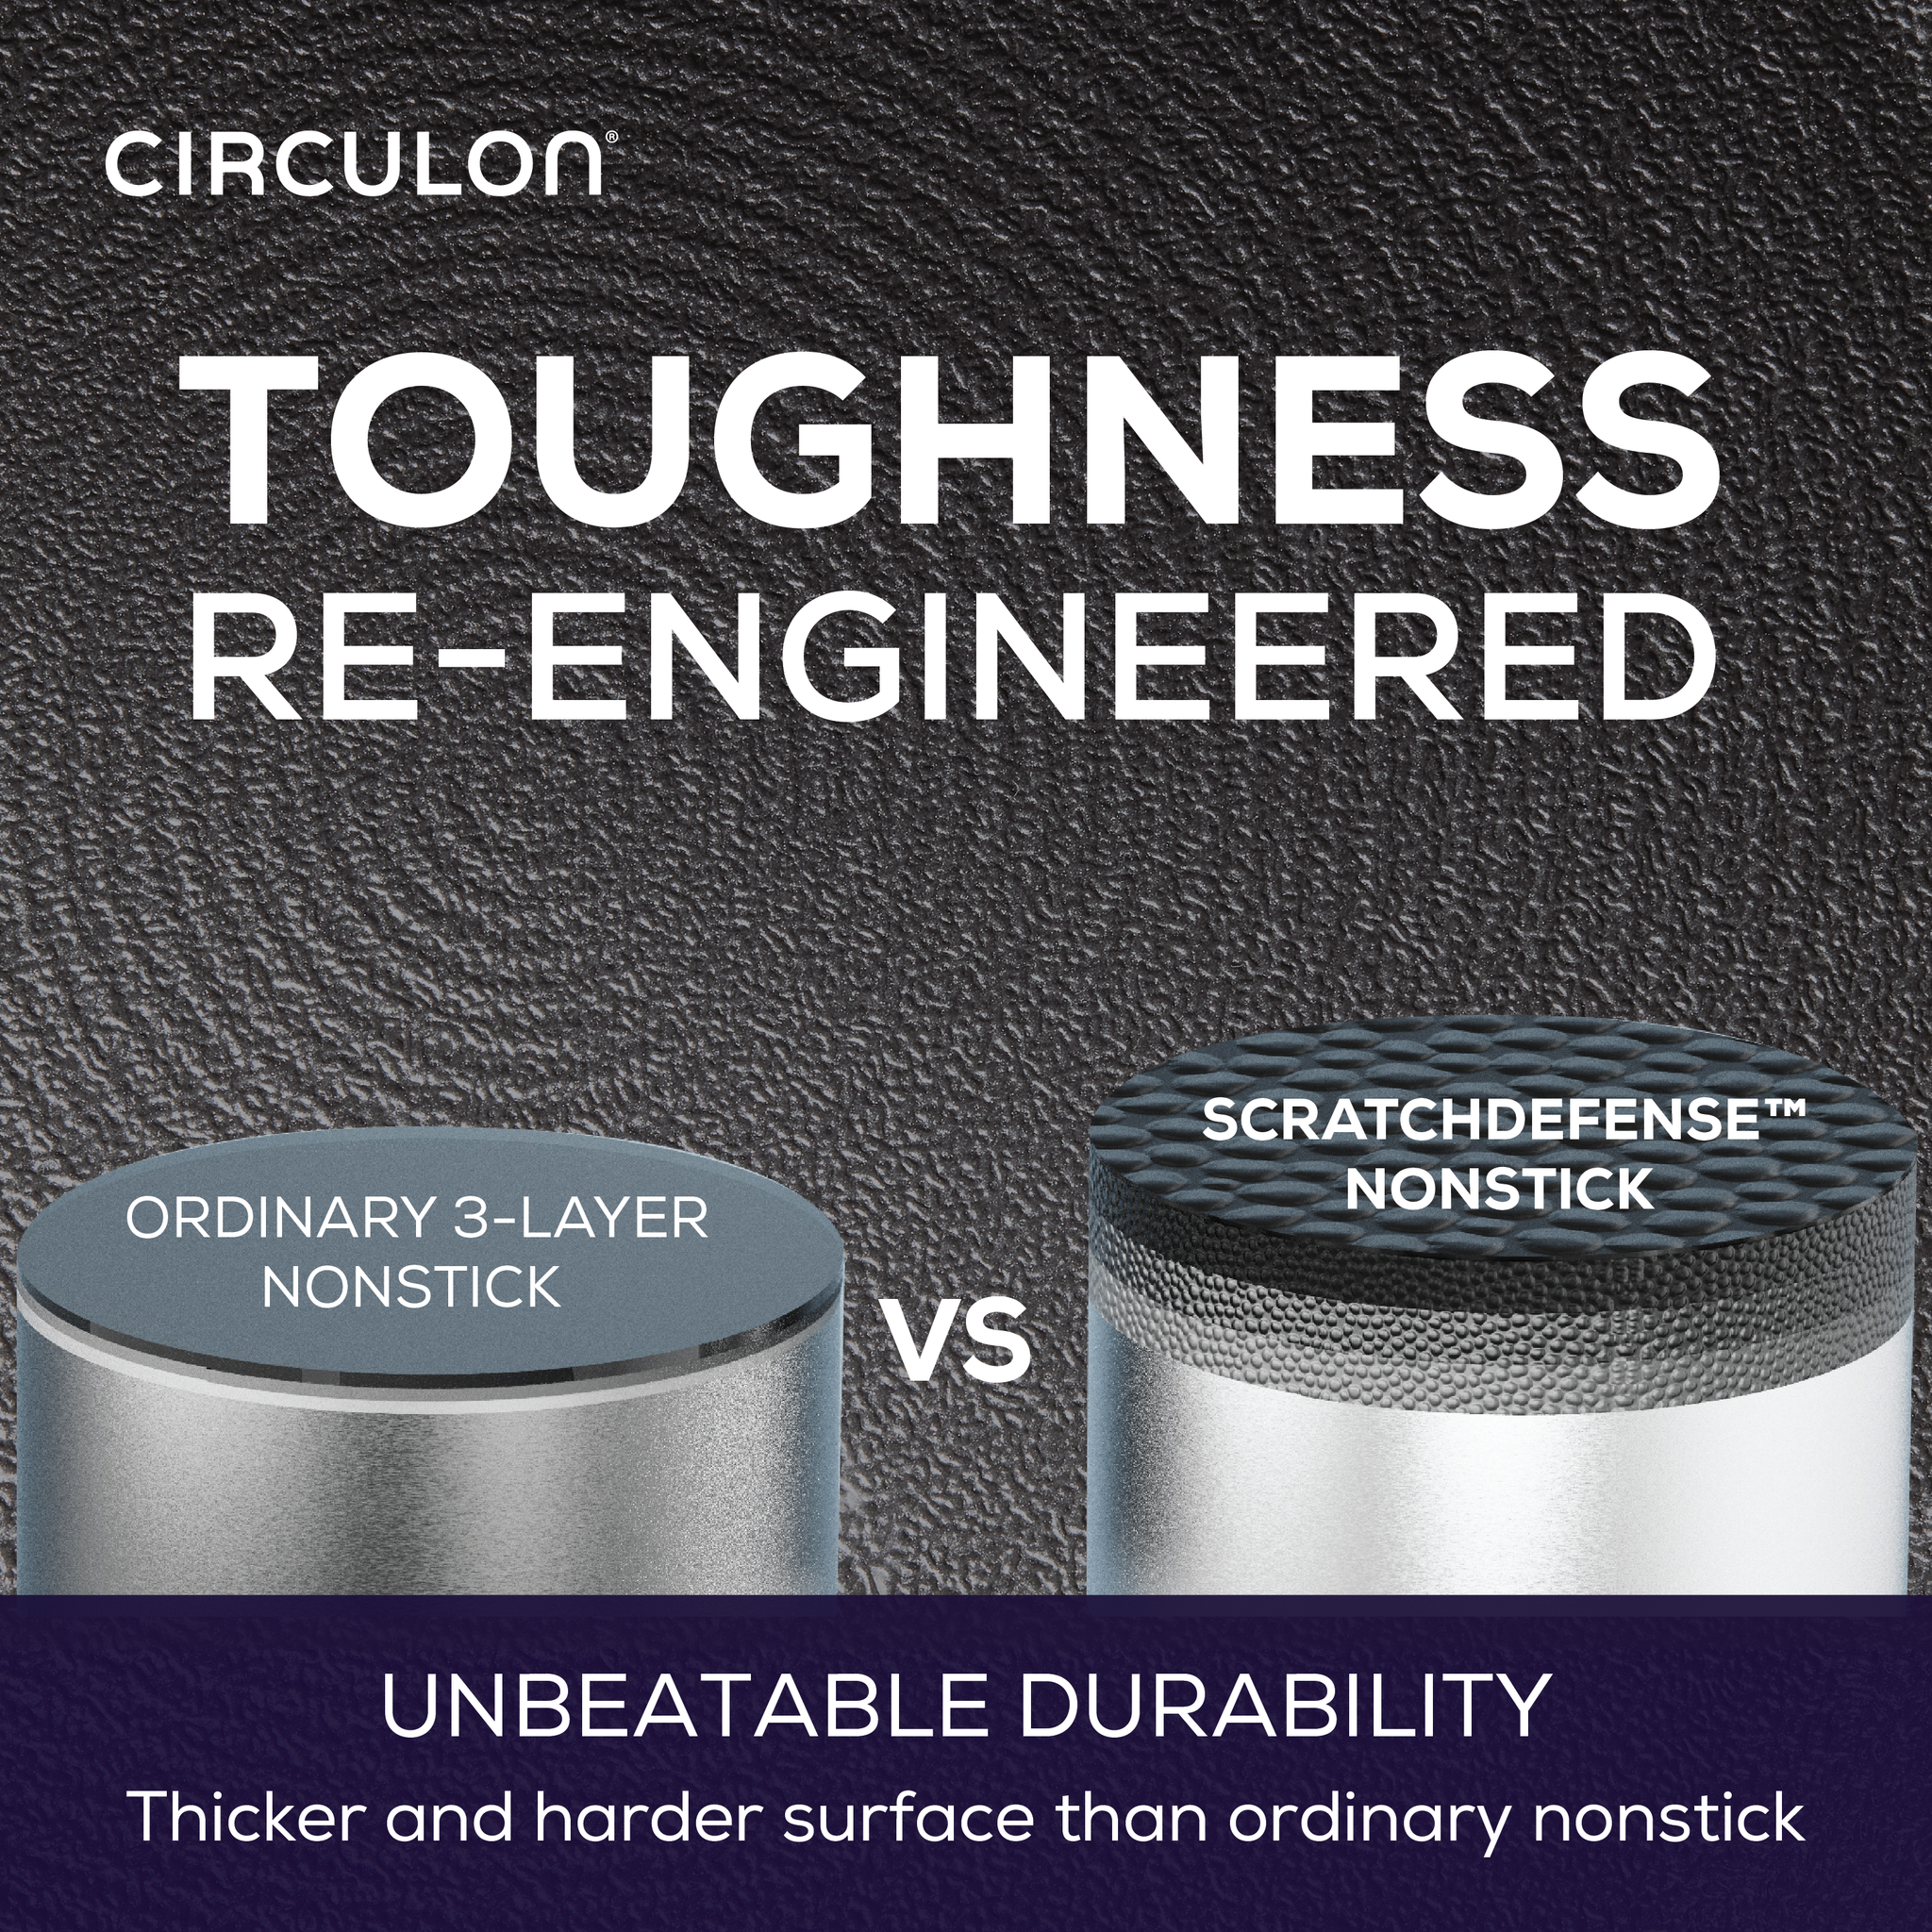 Circulon A1 Series with ScratchDefense Technology Nonstick